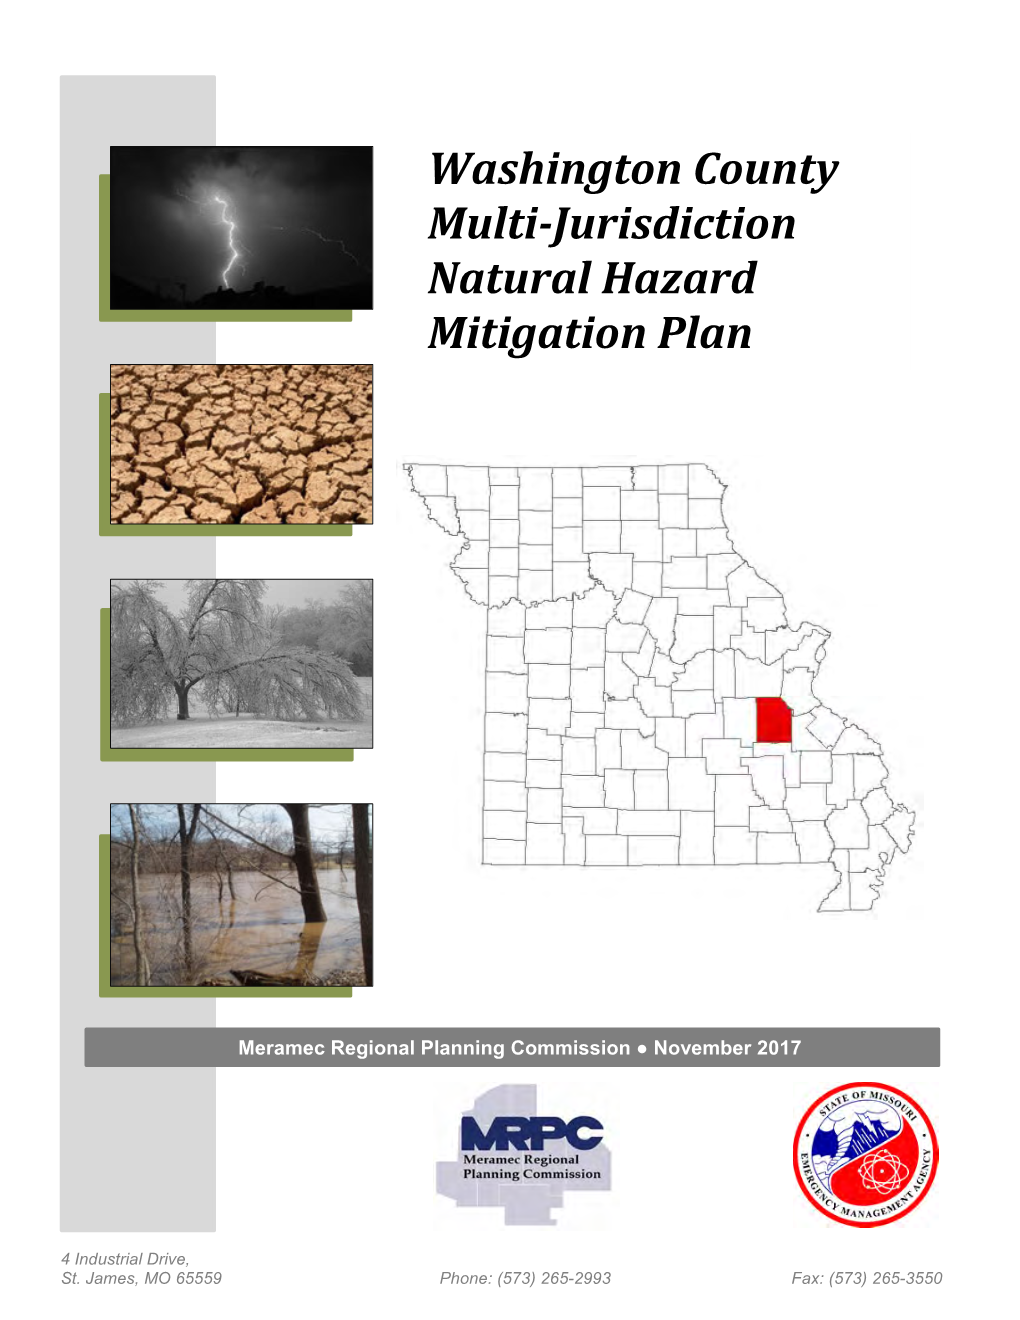 Washington County Multi-Jurisdiction Natural Hazard Mitigation Plan